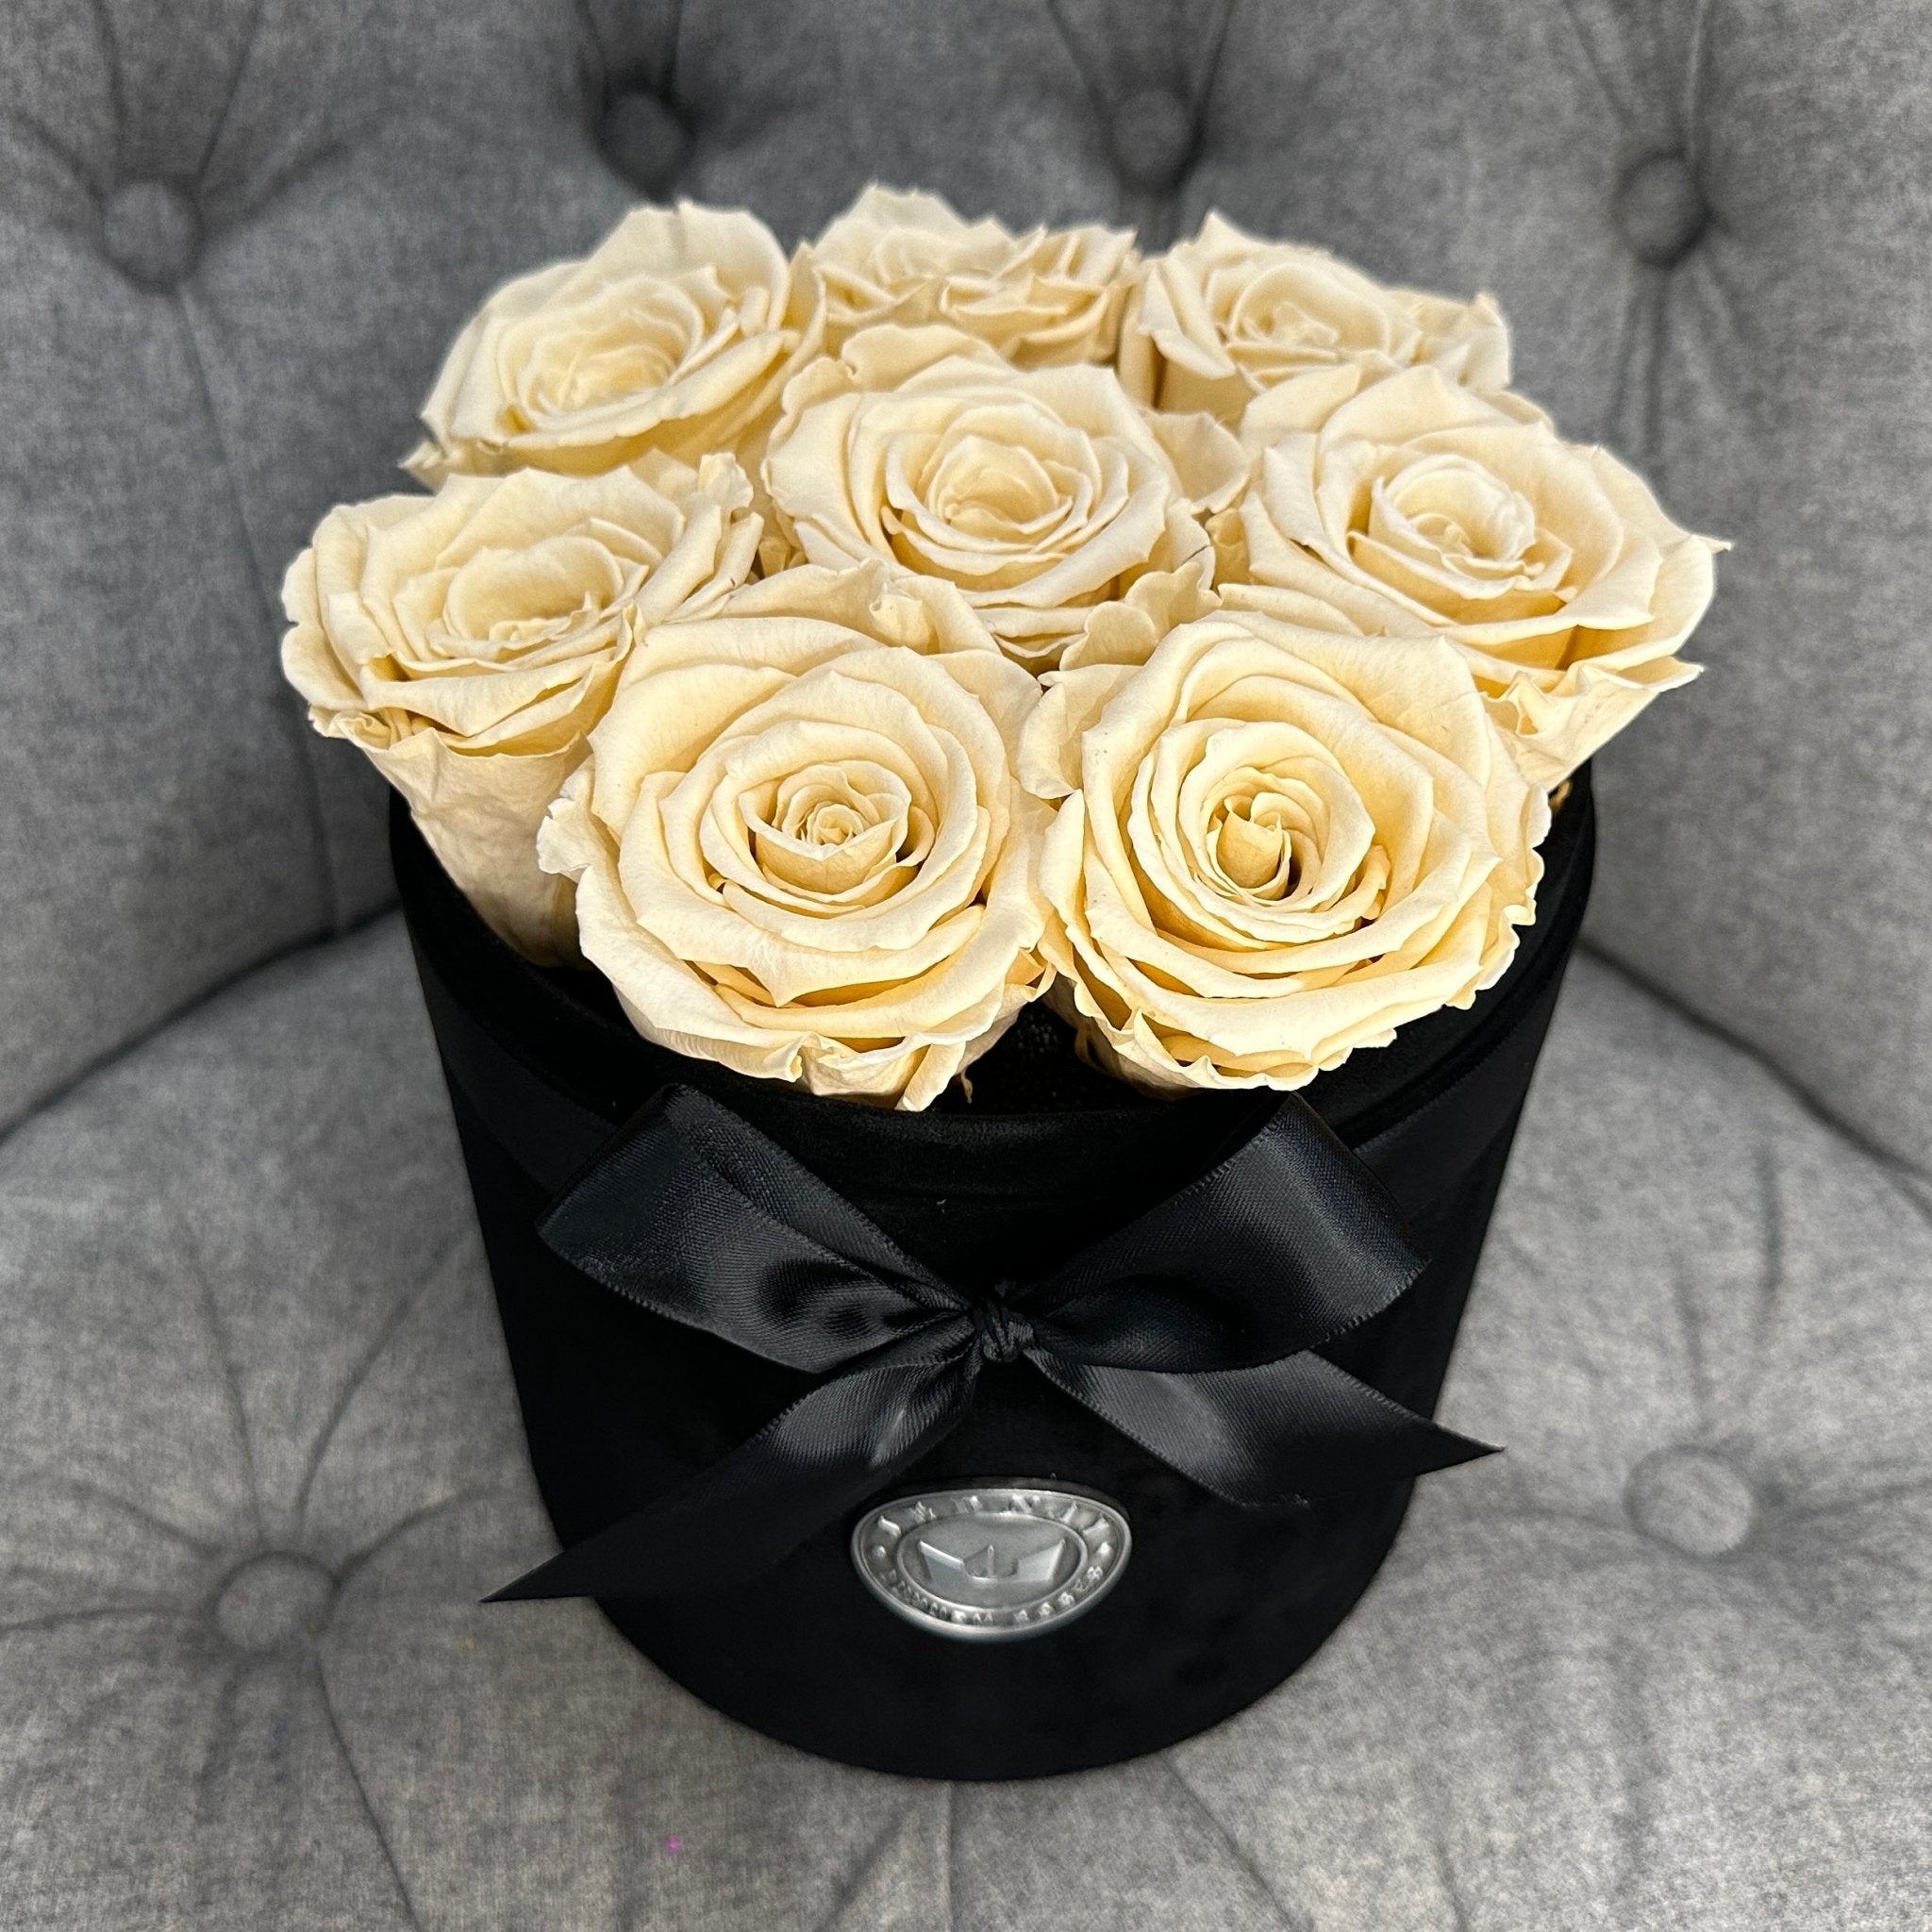 Medium Black Suede Forever Rose Box - Champagne Eternal Roses - Jednay Roses